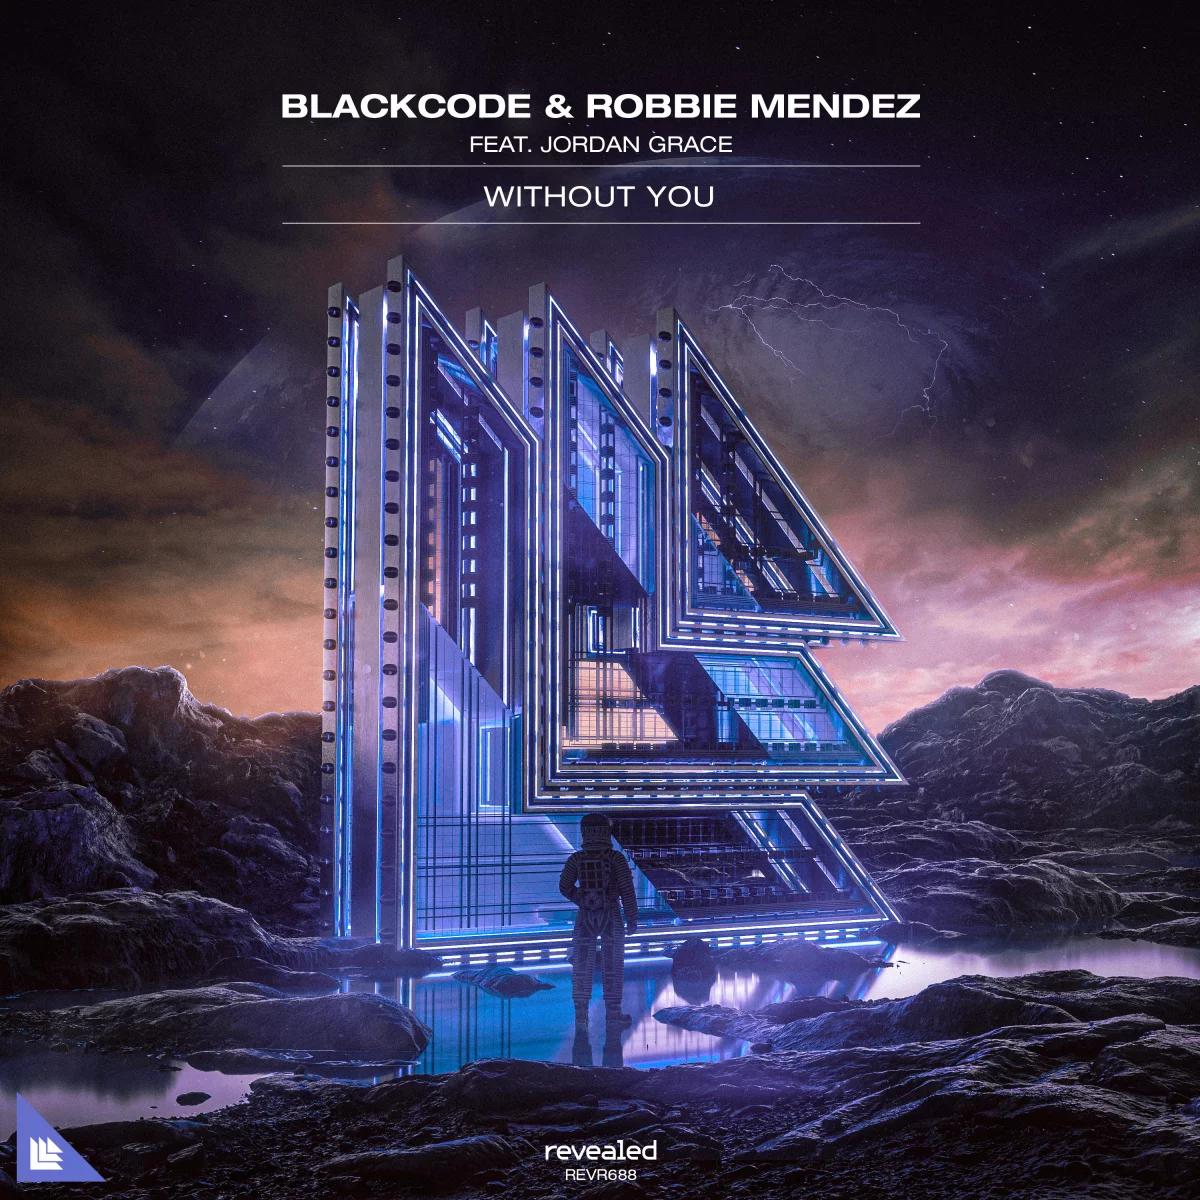 Without You - Blackcode⁠ & Robbie Mendez⁠ feat. Jordan Grace⁠